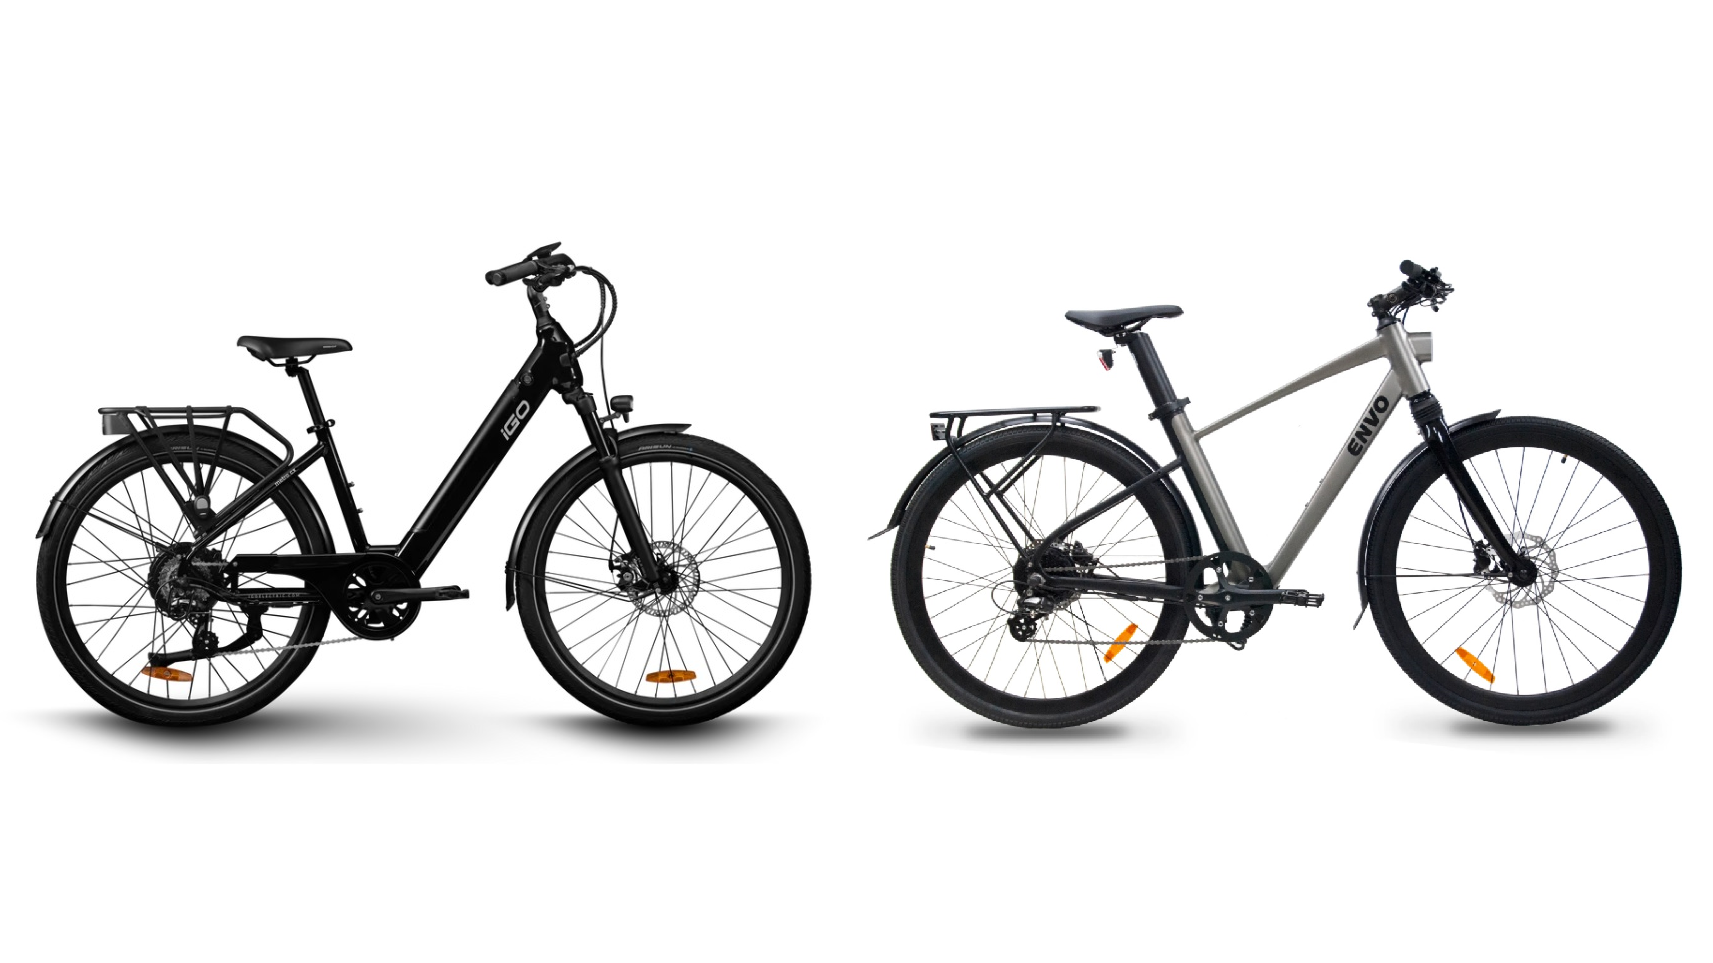 Envo Stax Pro VS iGo Metro CX - Which electric bike is better?